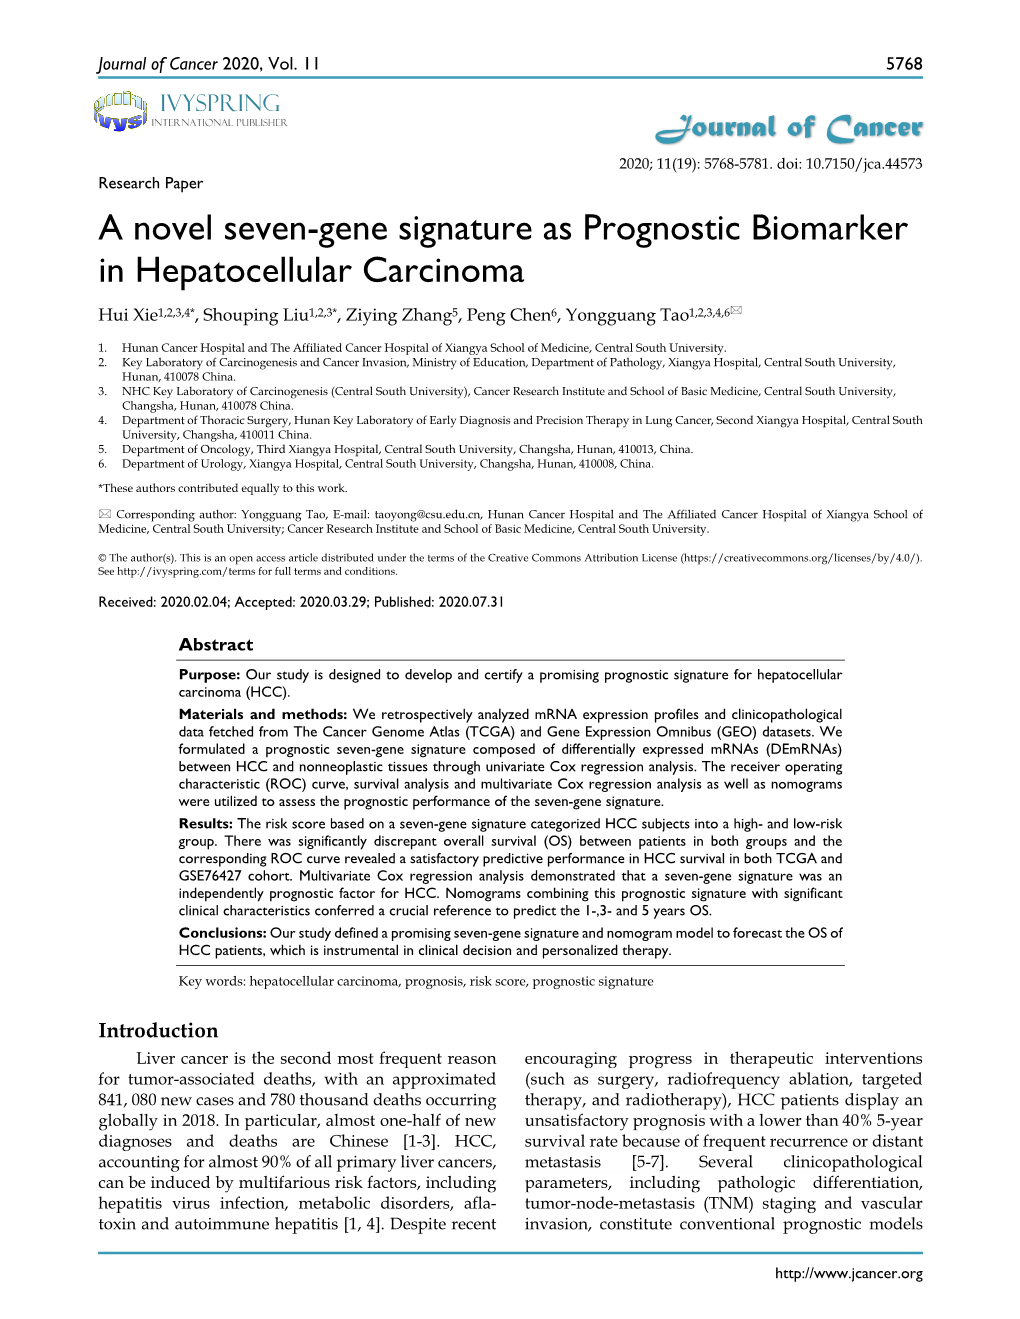 A Novel Seven-Gene Signature As Prognostic Biomarker In